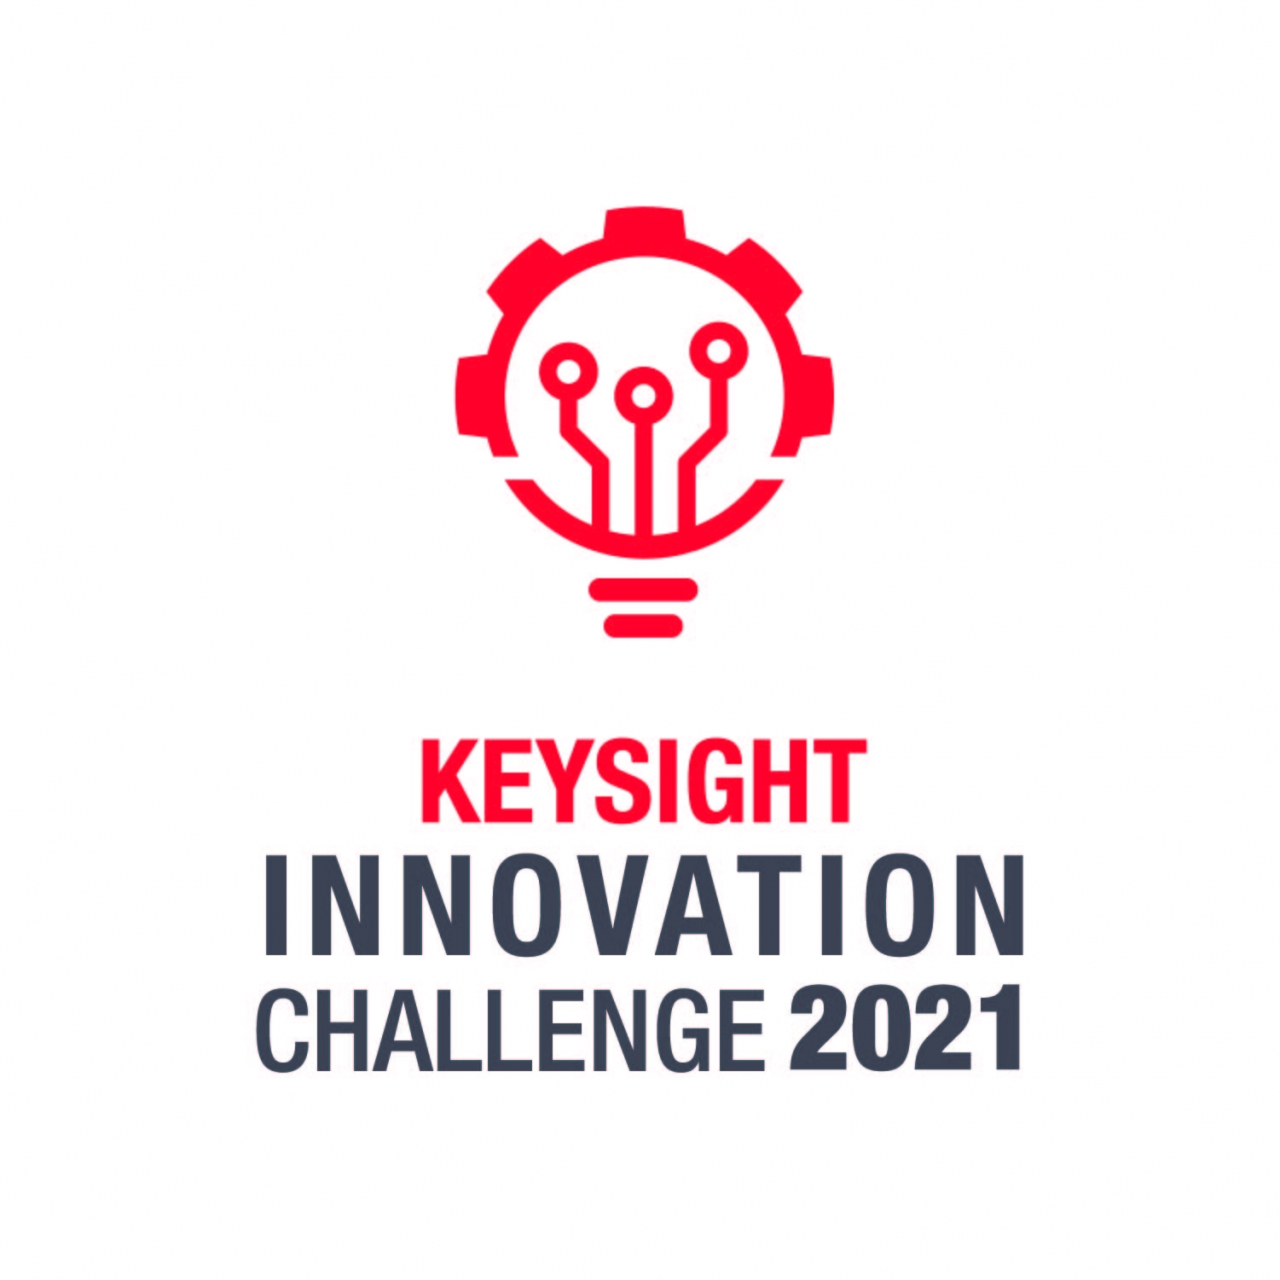 Keysight Innovation Challenge 2021 logo